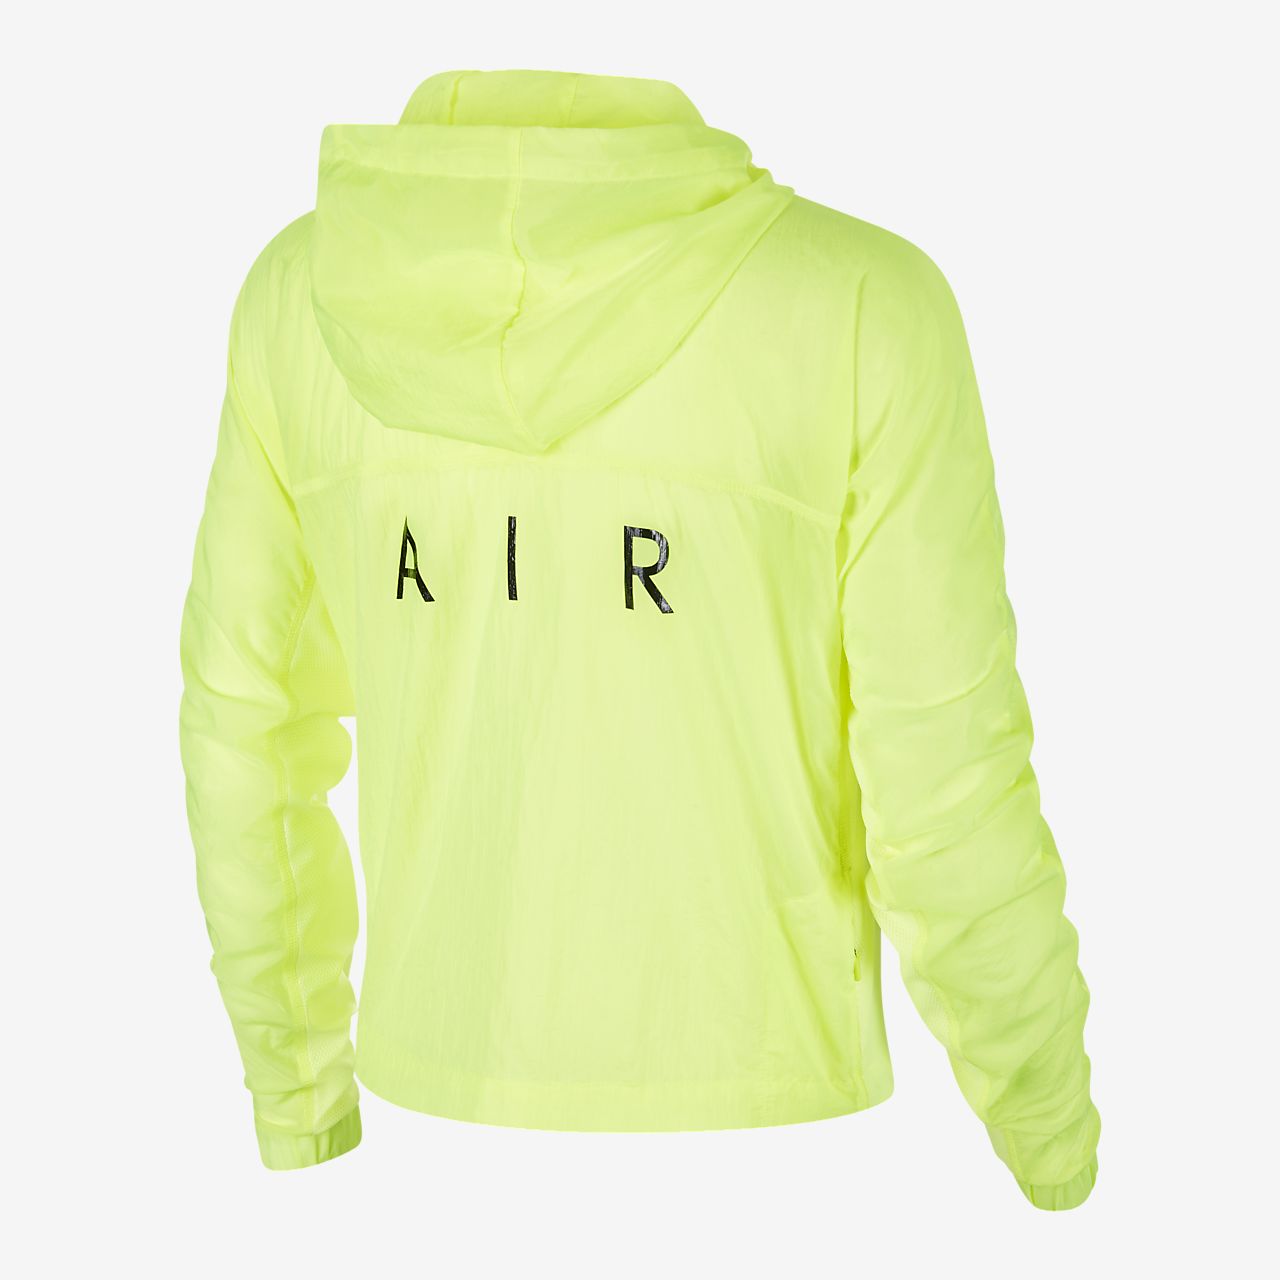 women's hooded running jacket nike air